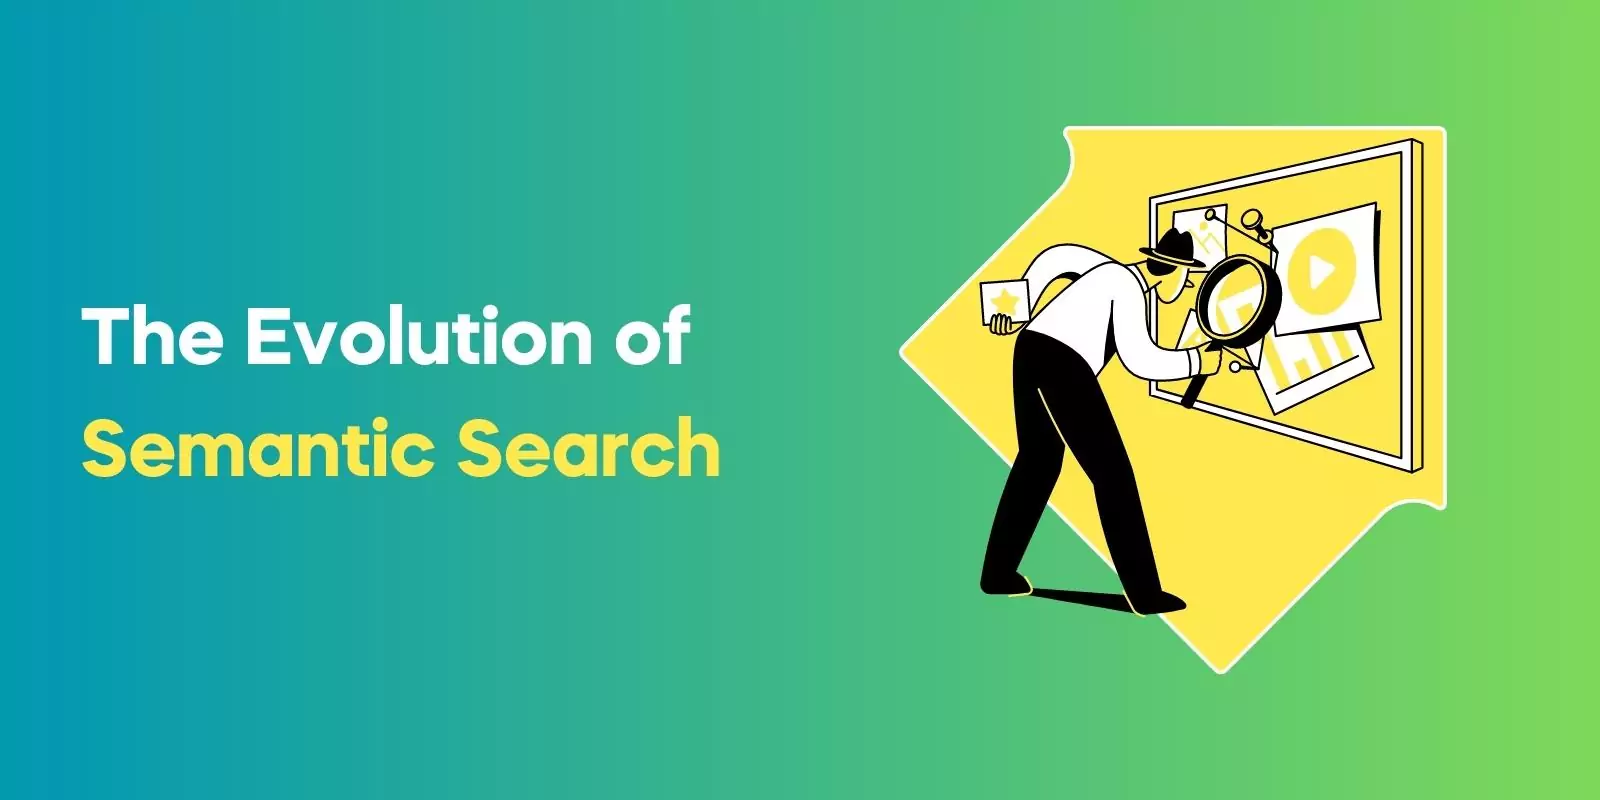 The Evolution of Semantic Search